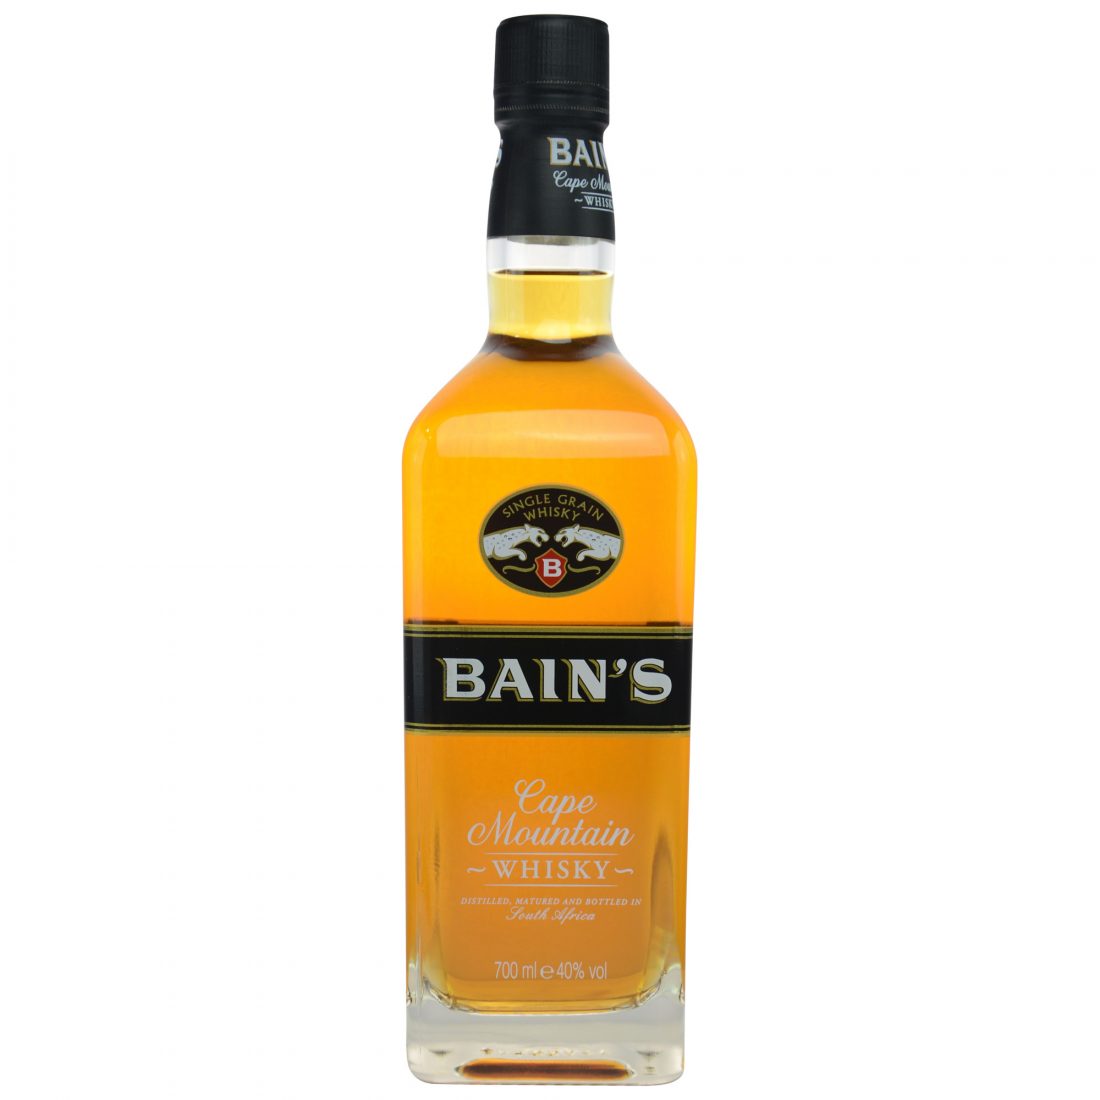 Bain's whisky